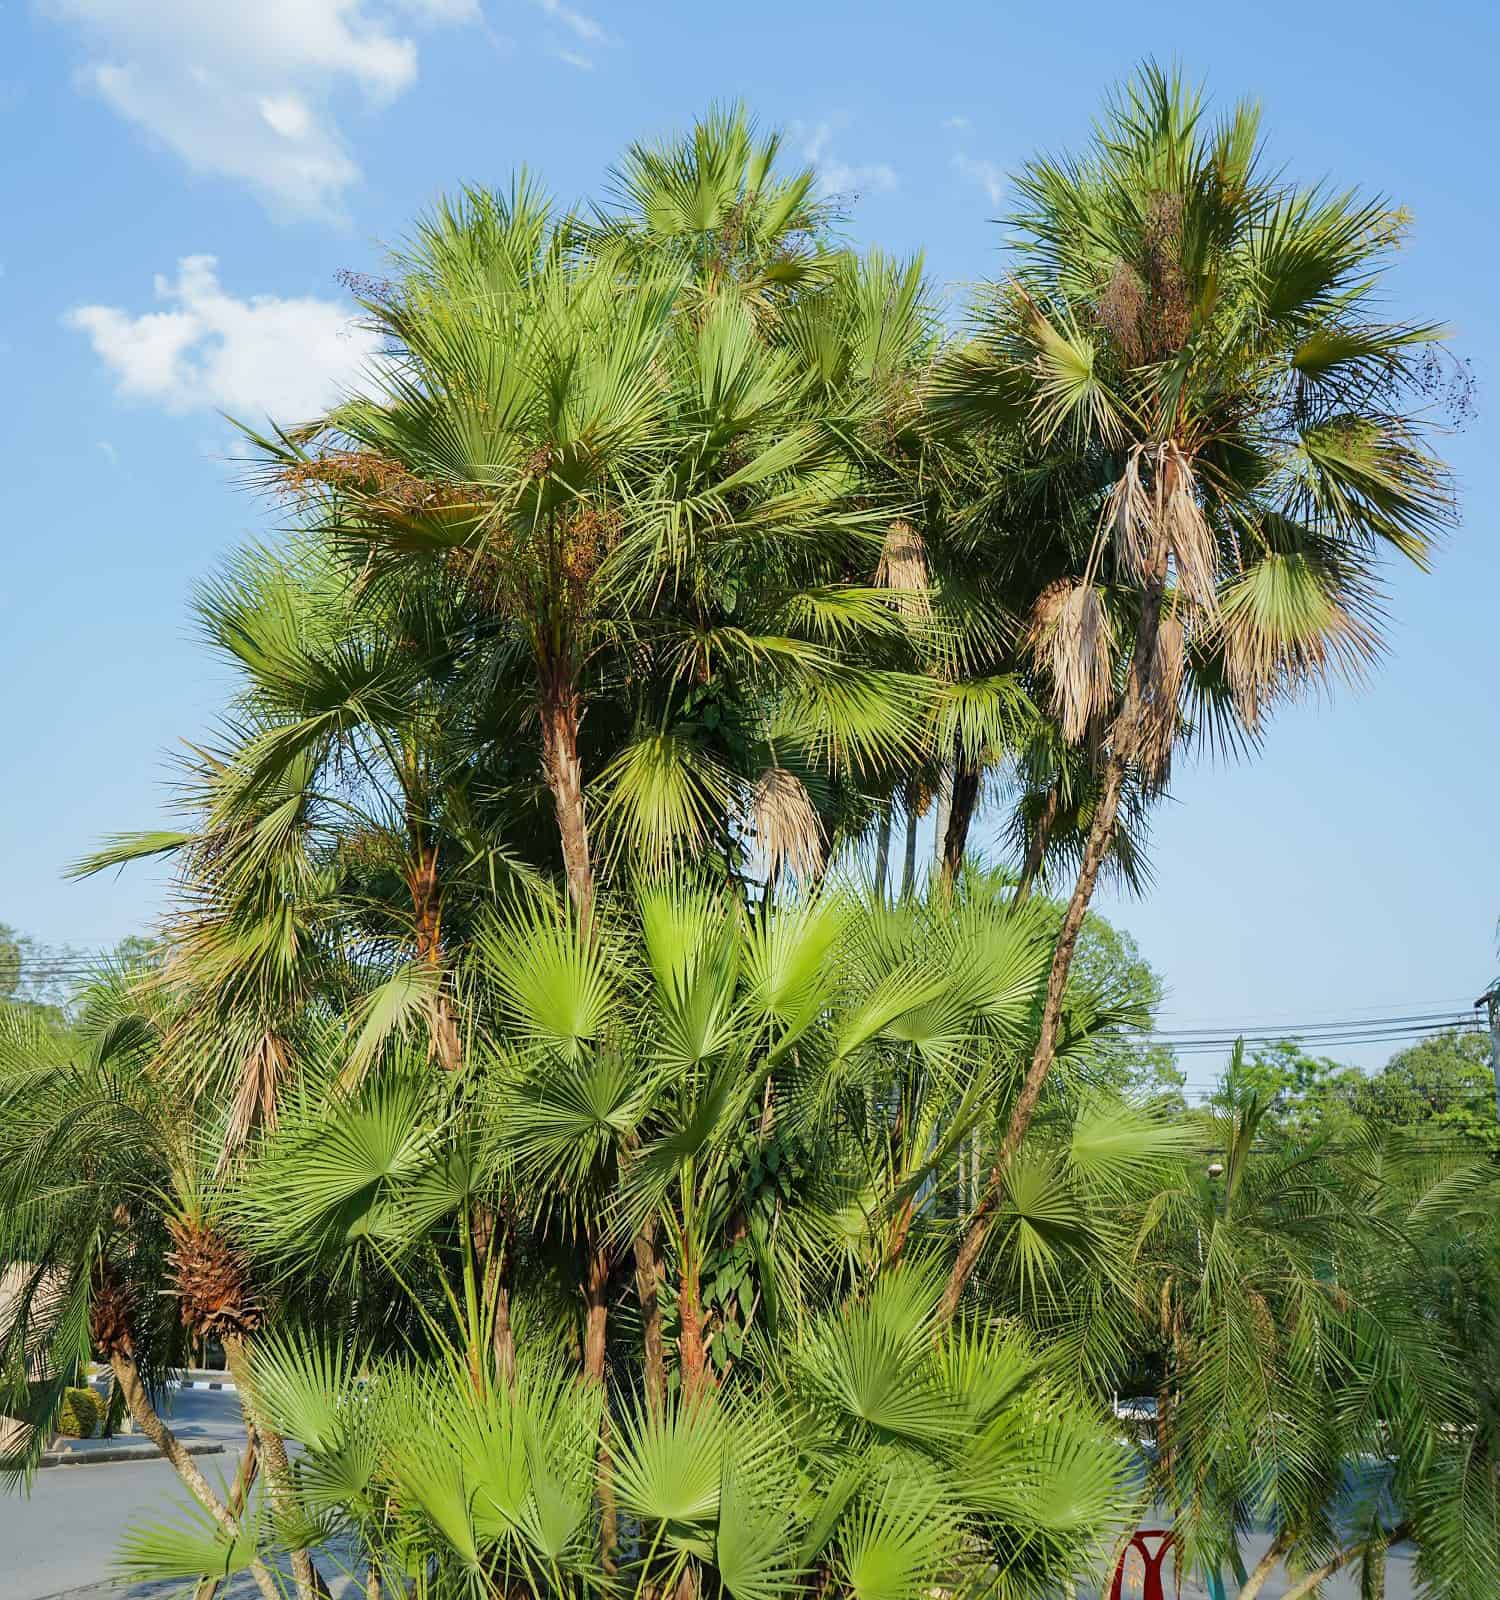  Acoelorrhaphe wrightii palm trees in Thailand 